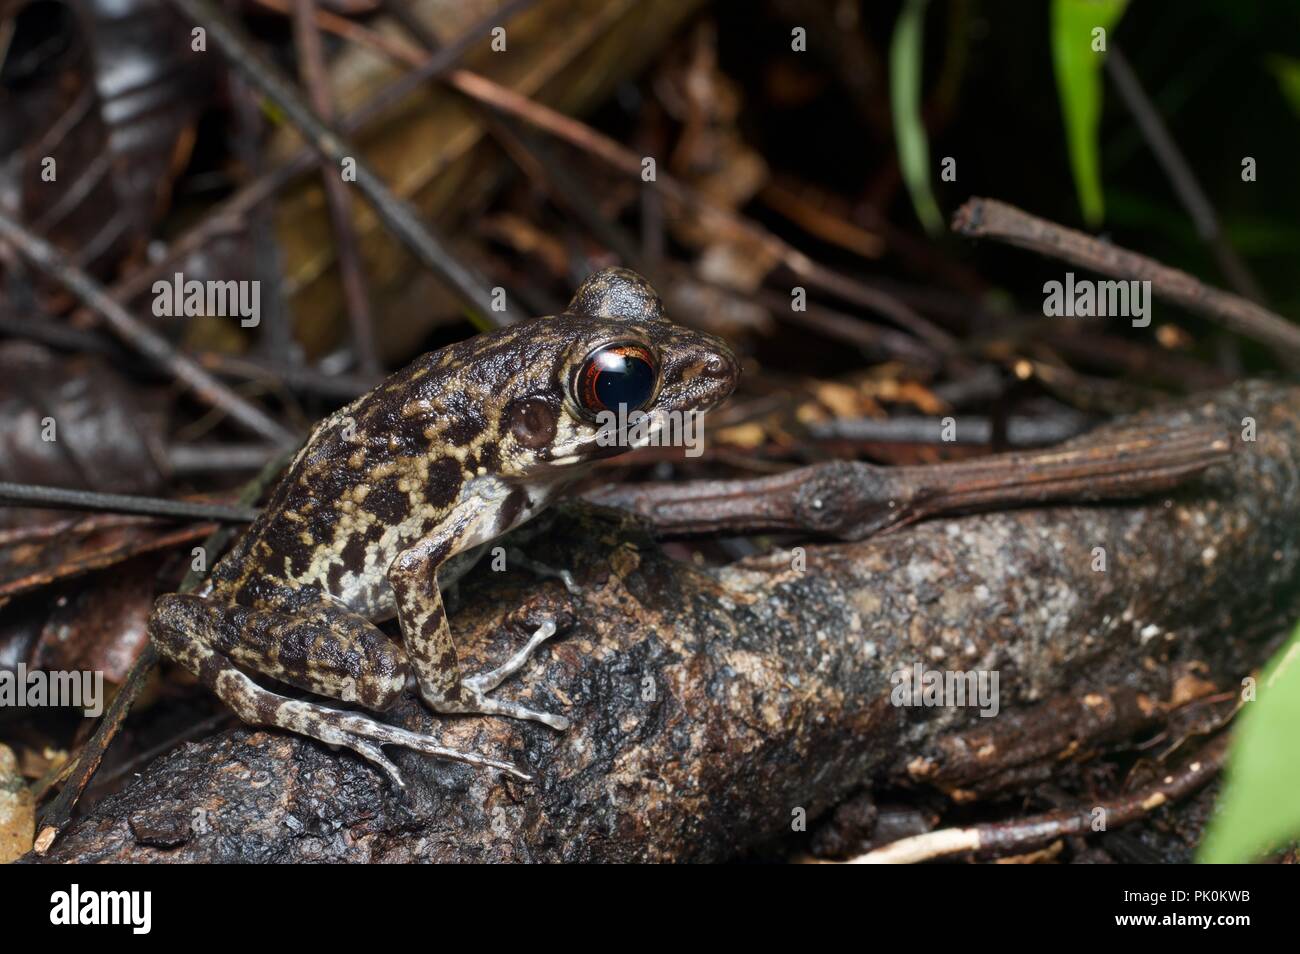 A Rough-sided Frog (Pulchrana glandulosa) on the forest floor in Gunung Mulu National Park, Sarawak, East Malaysia, Borneo Stock Photo